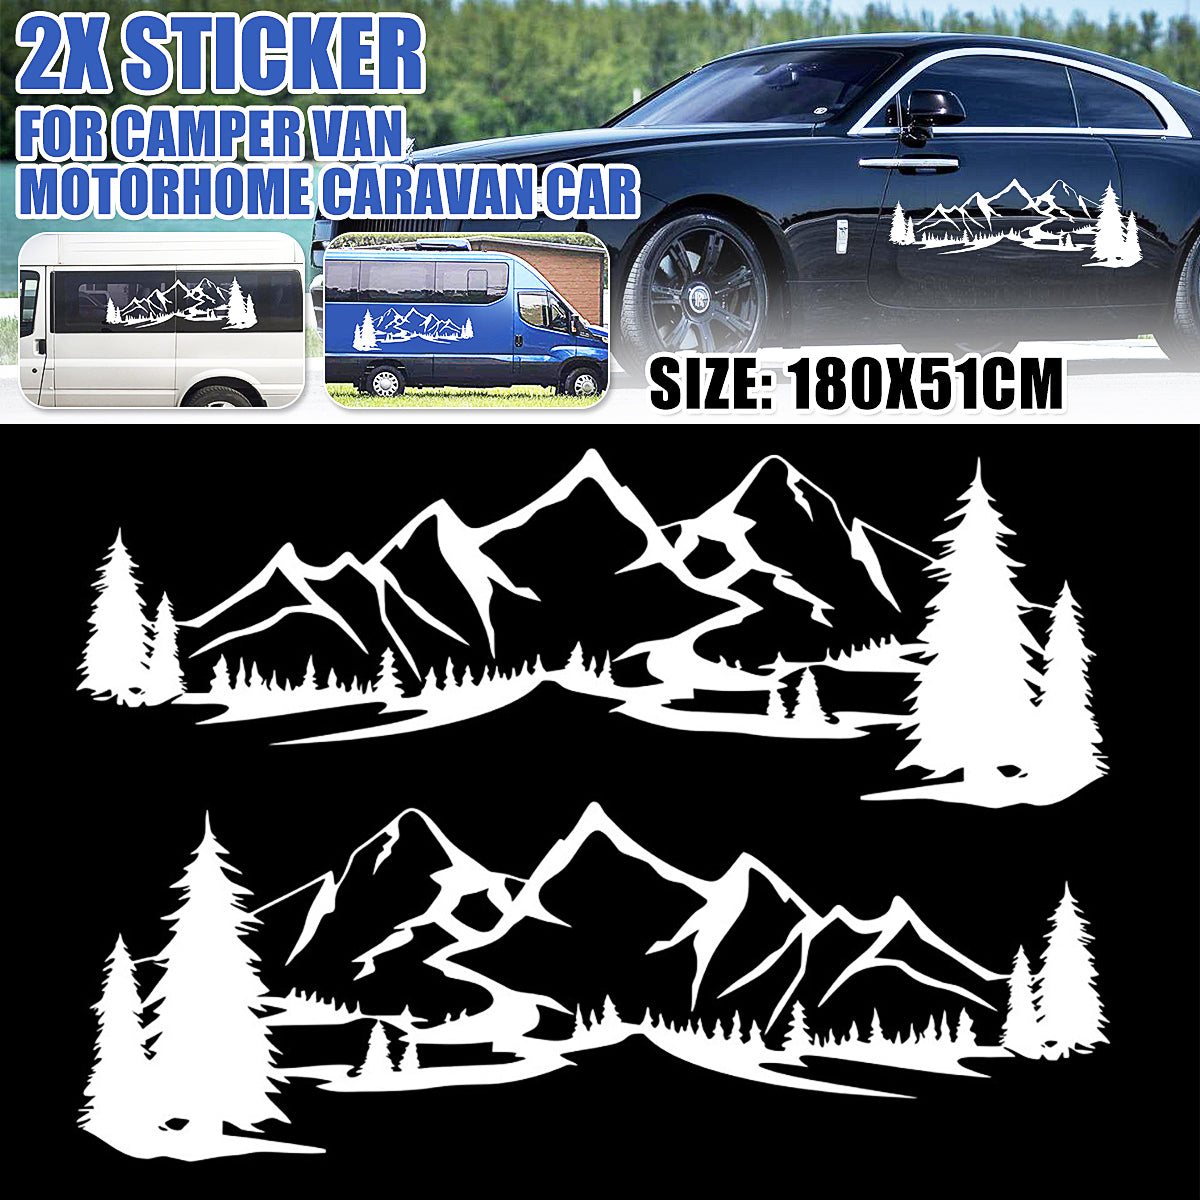 2PCS Decal Stickers Side Body Large Mountains For Camper Motorhome Van Caravan RVS